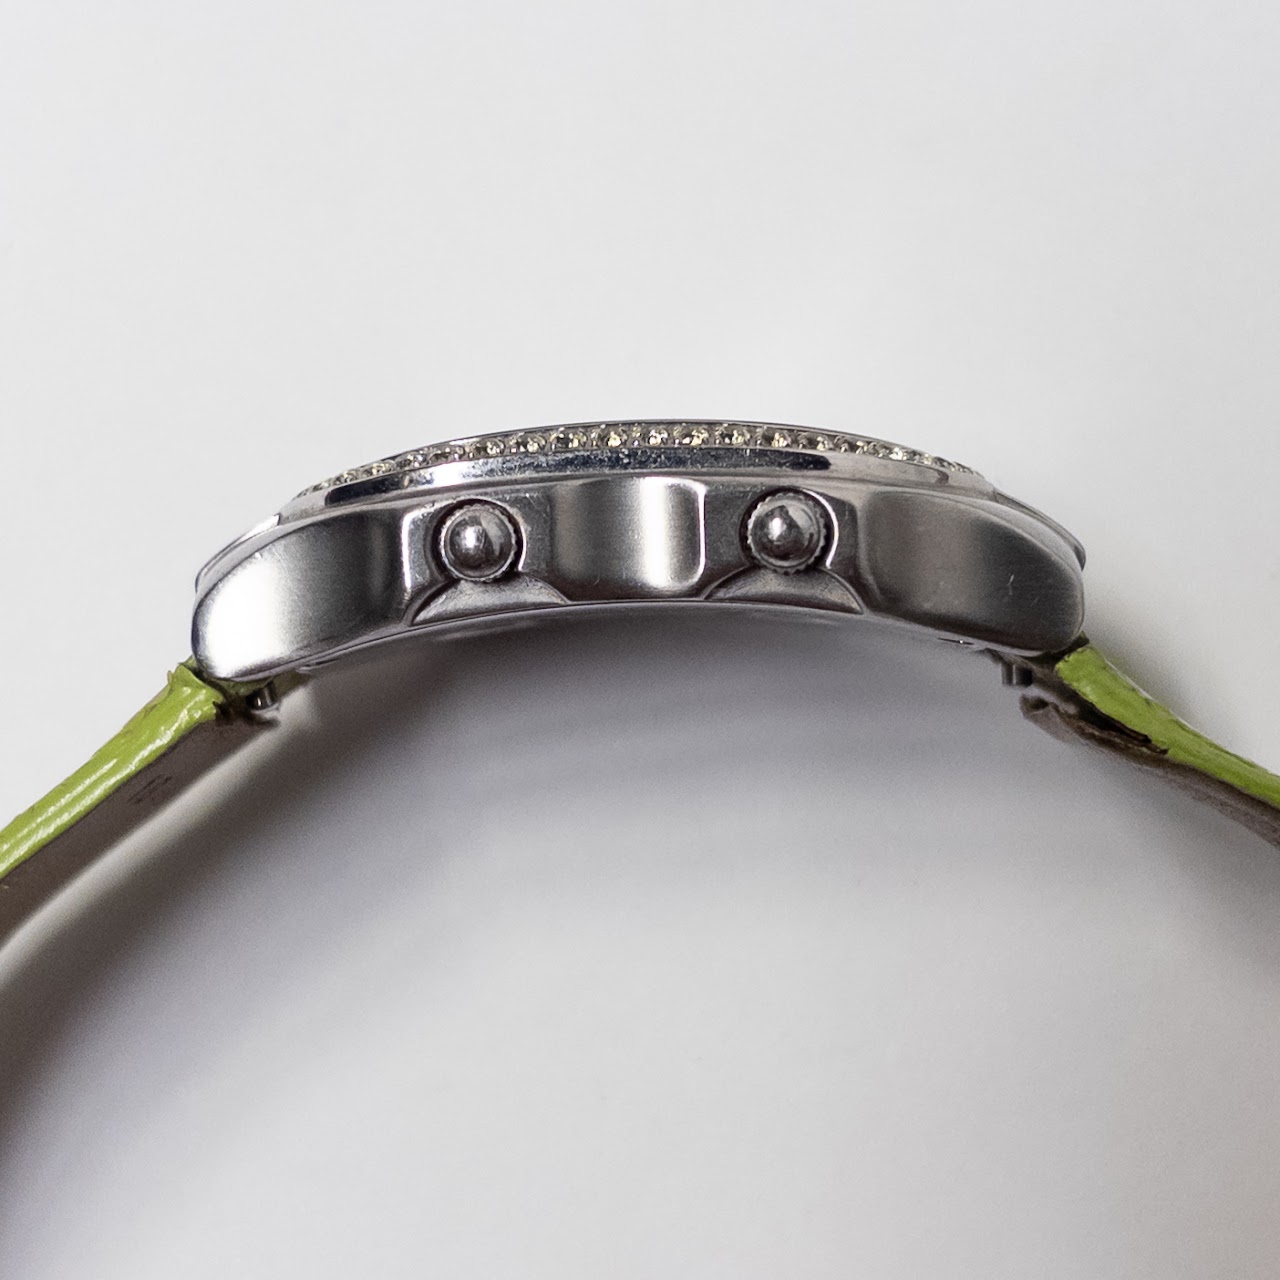 Philip Stein Dual Dial Teslar Watch